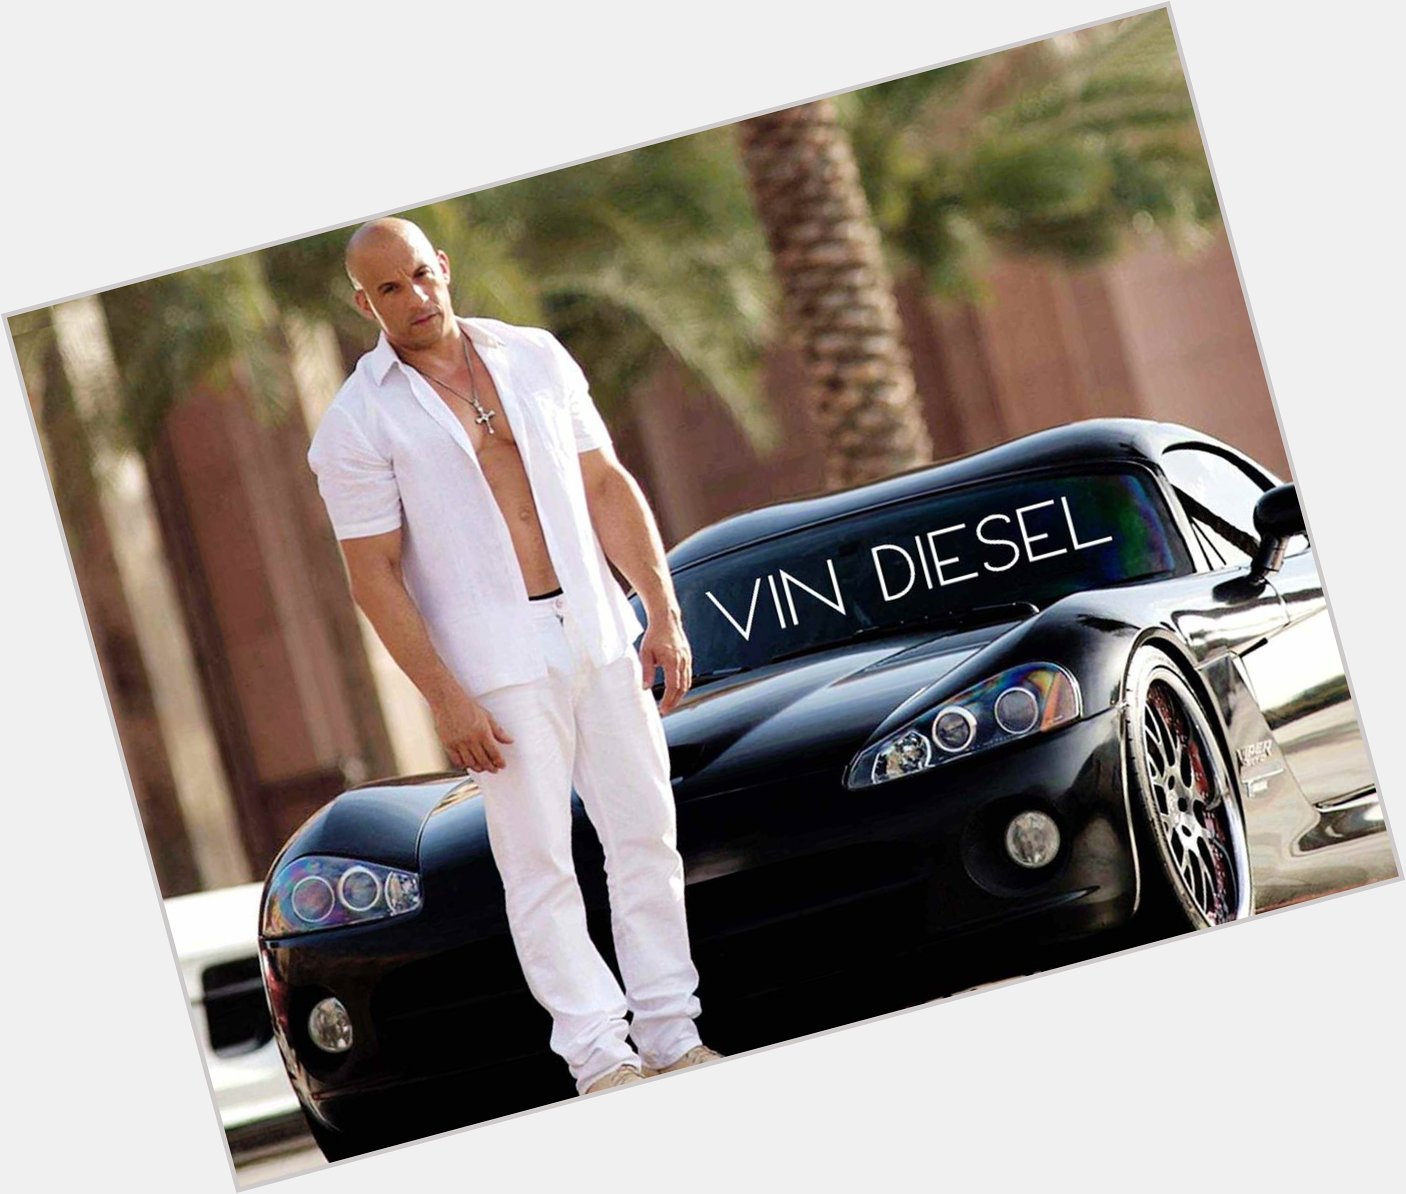 Happy Birthday to Vin Diesel    About:  